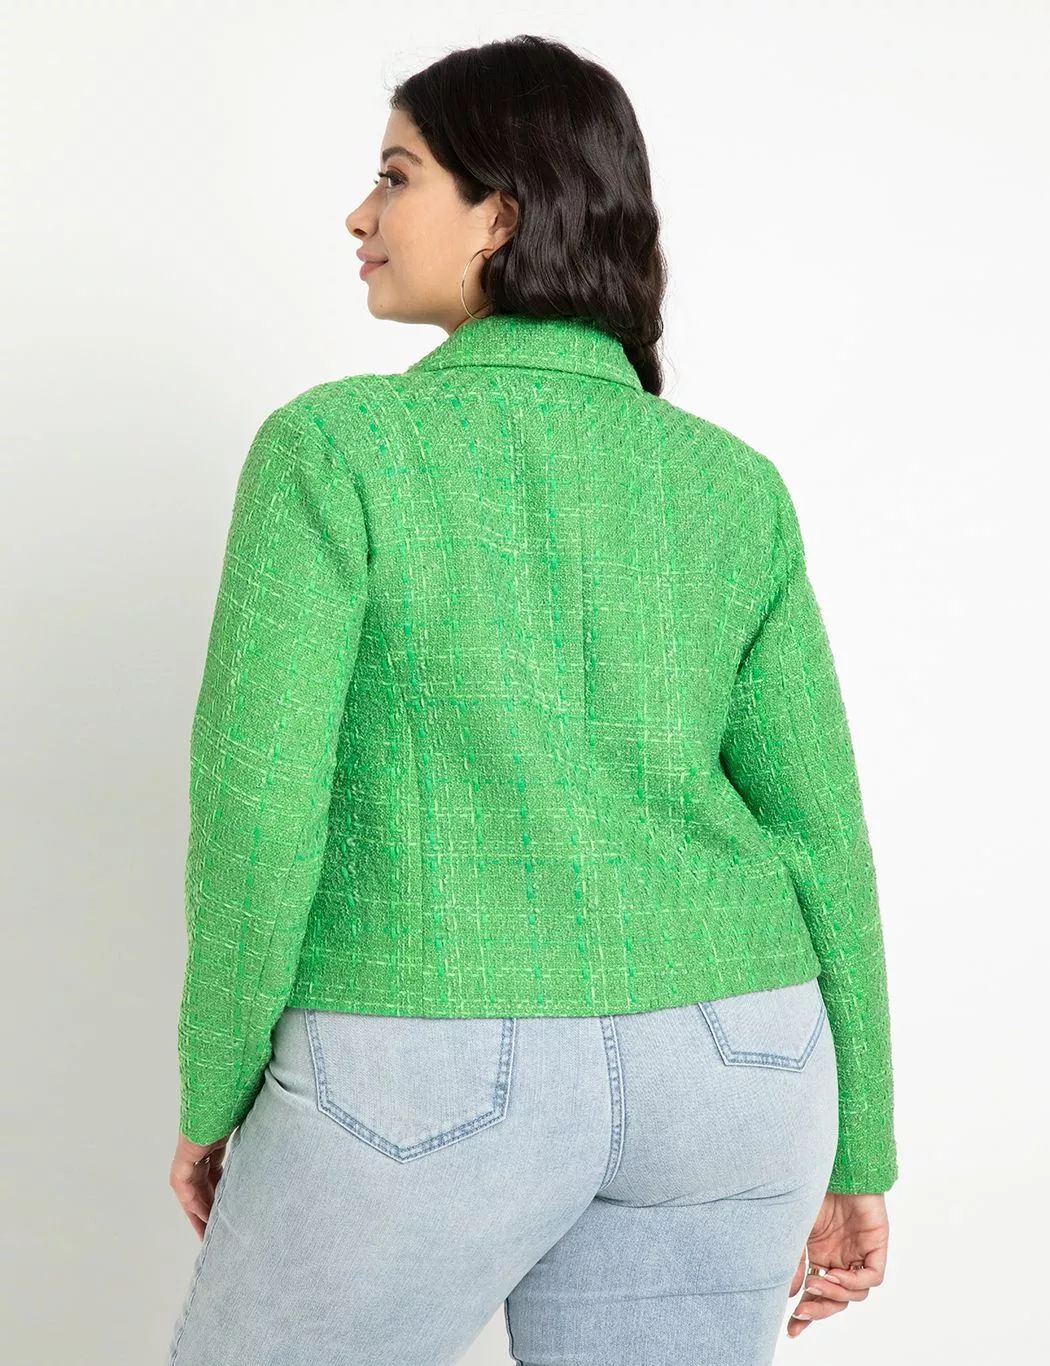 Tweed Blazer | Women's Plus Size Coats + Jackets | ELOQUII | Eloquii